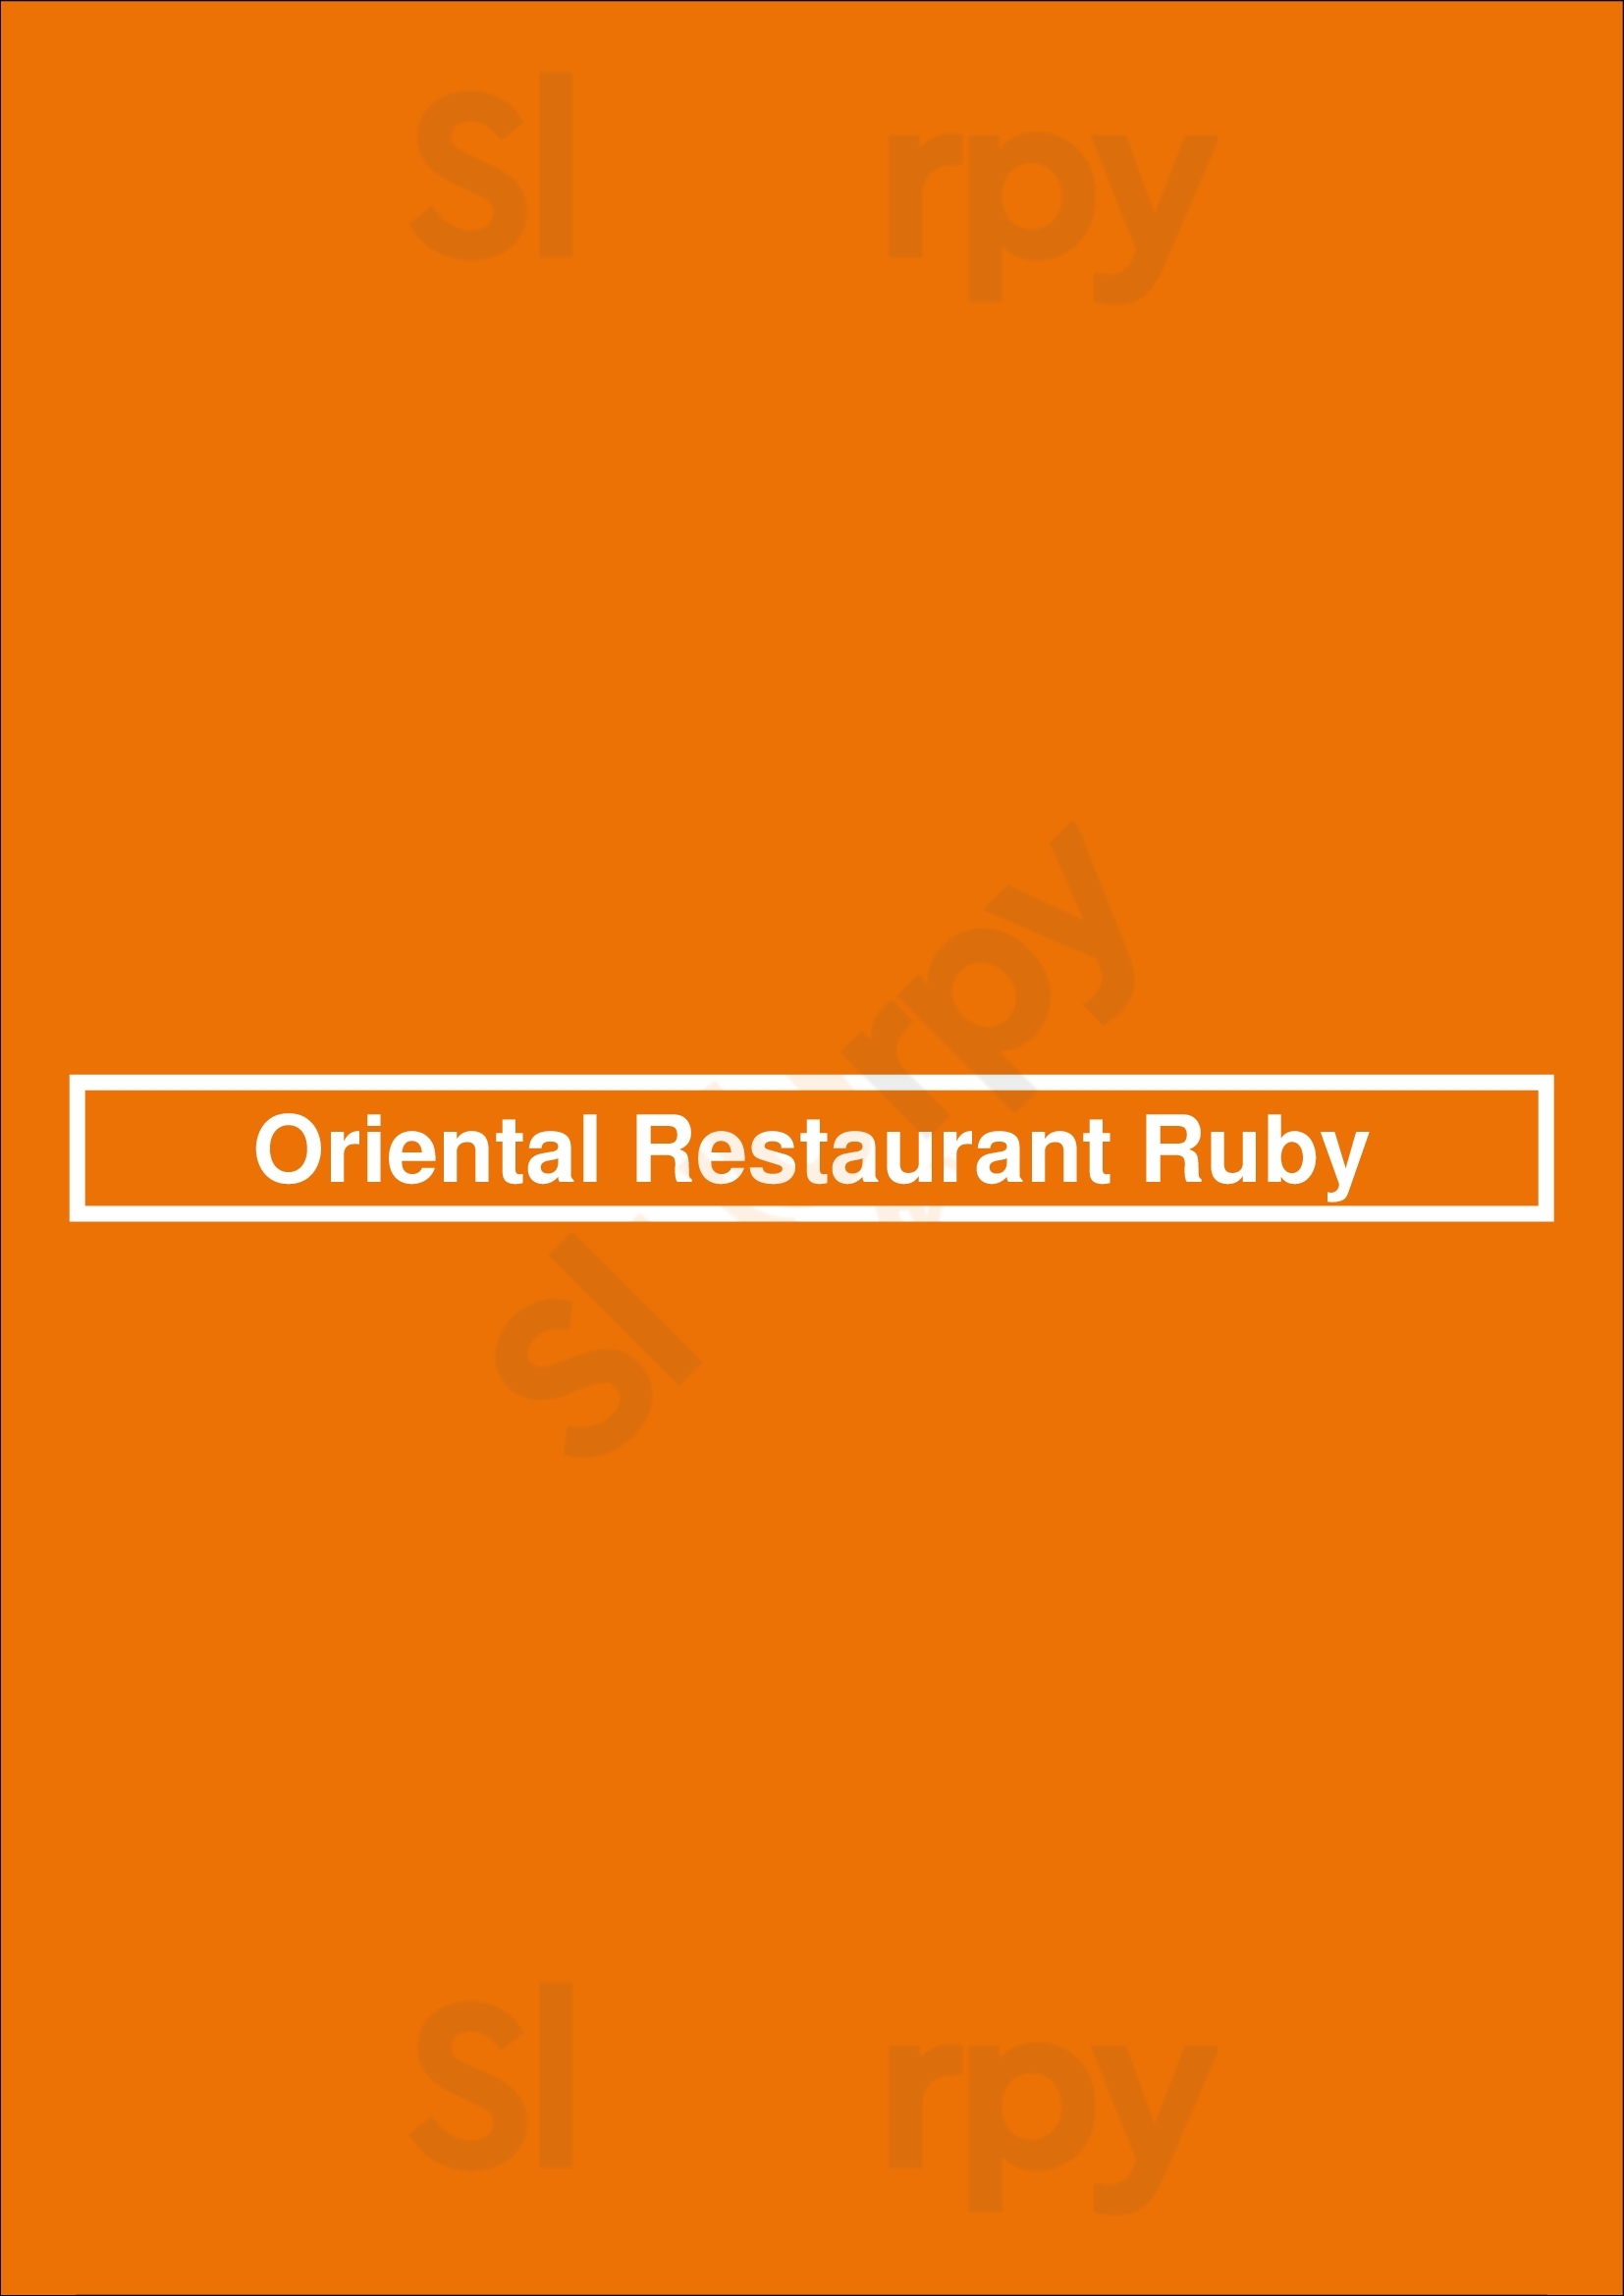 Oriental Restaurant Ruby Amsterdam Menu - 1